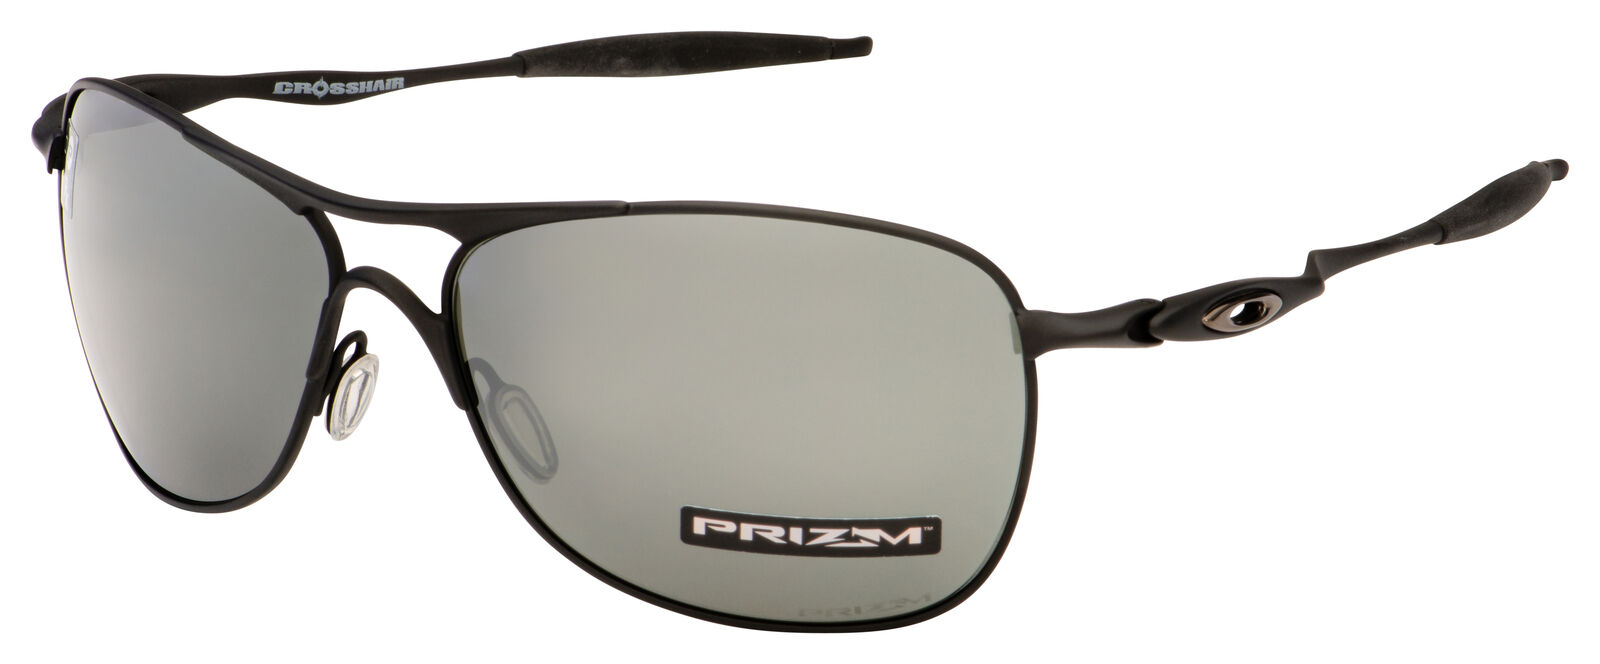 Oakley 0OO4060 61mm Crosshair Aviator Sunglasses For Men - Prizm 